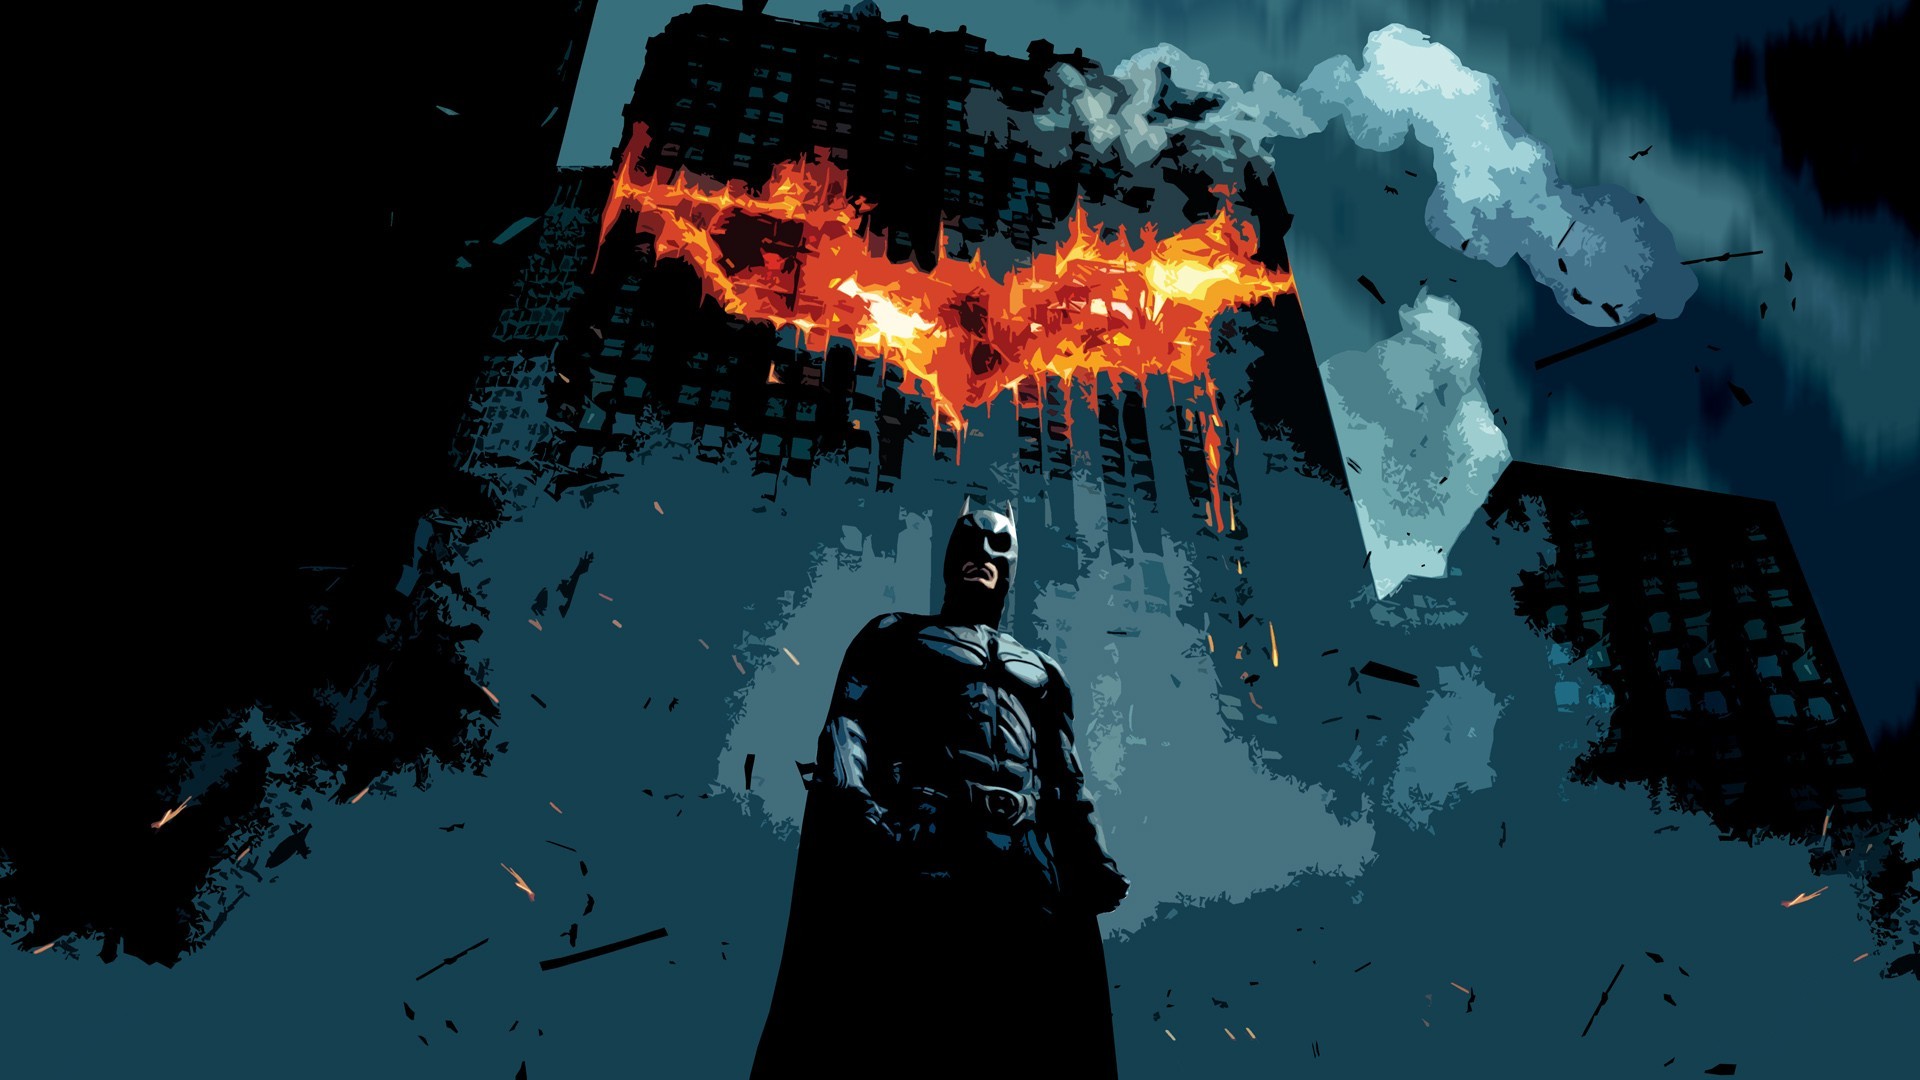 Batman, Bat Signal, MessenjahMatt Wallpaper